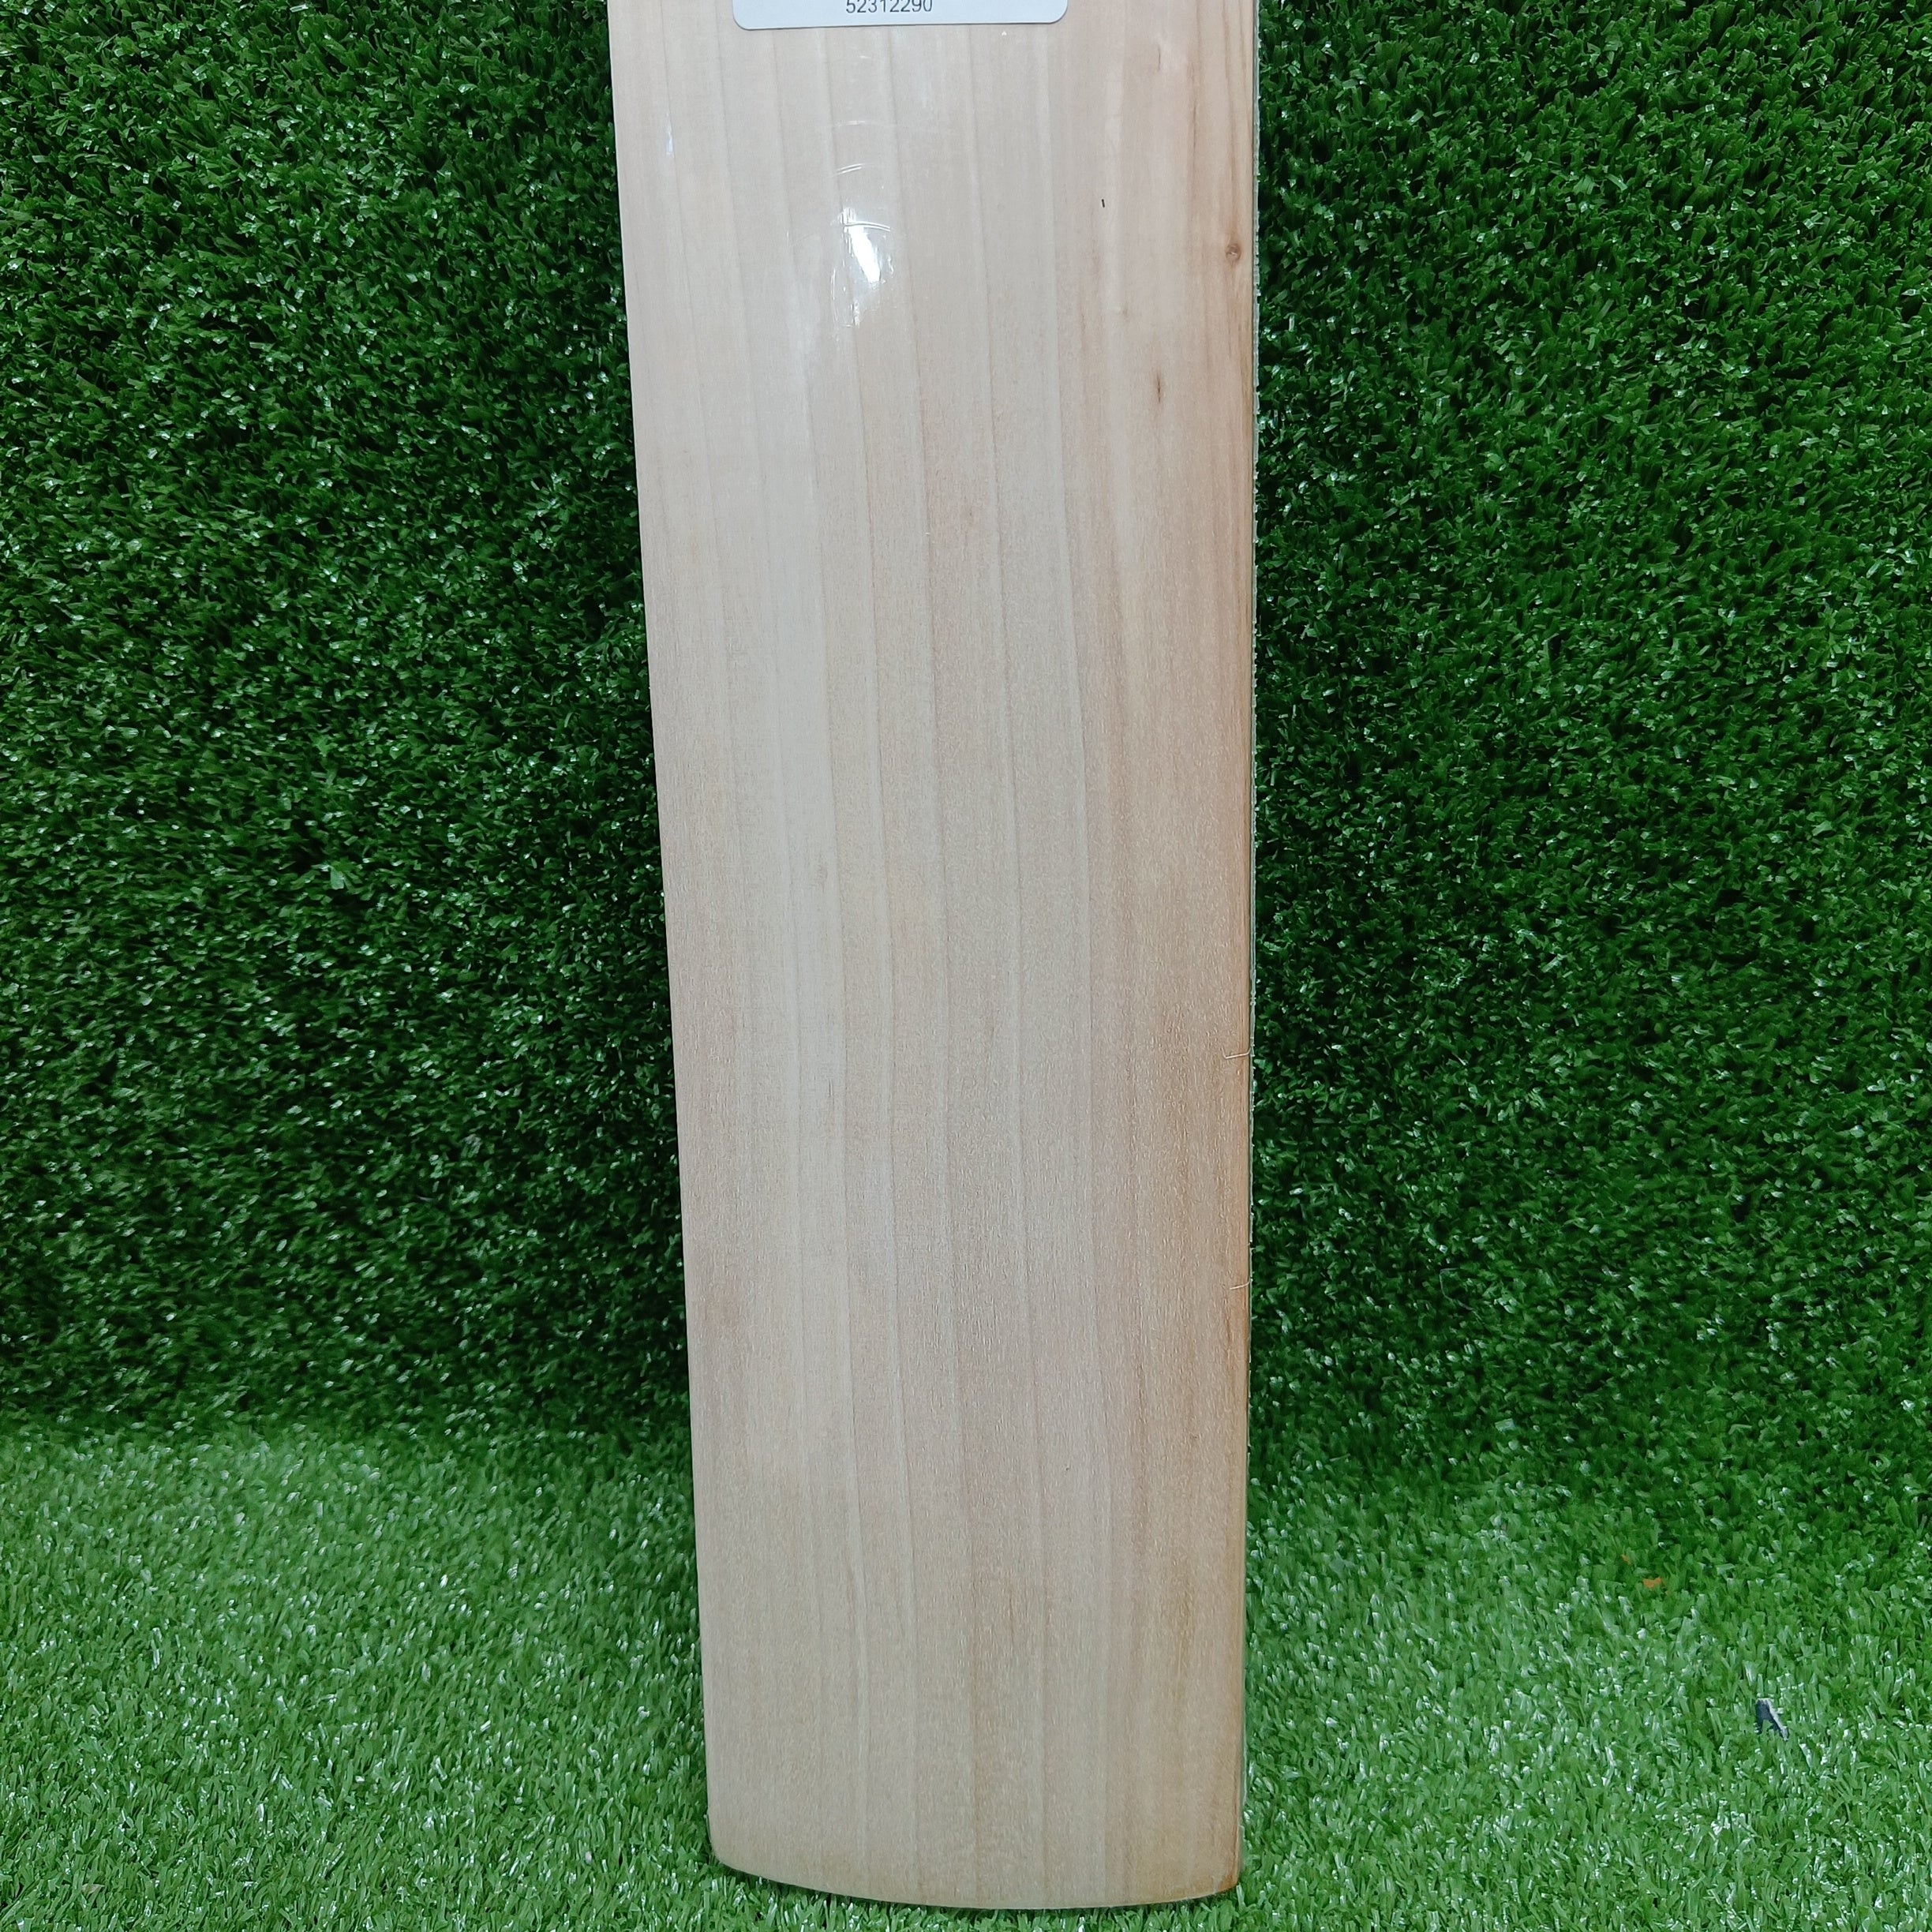 NB TC Limited Edition Cricket Bat